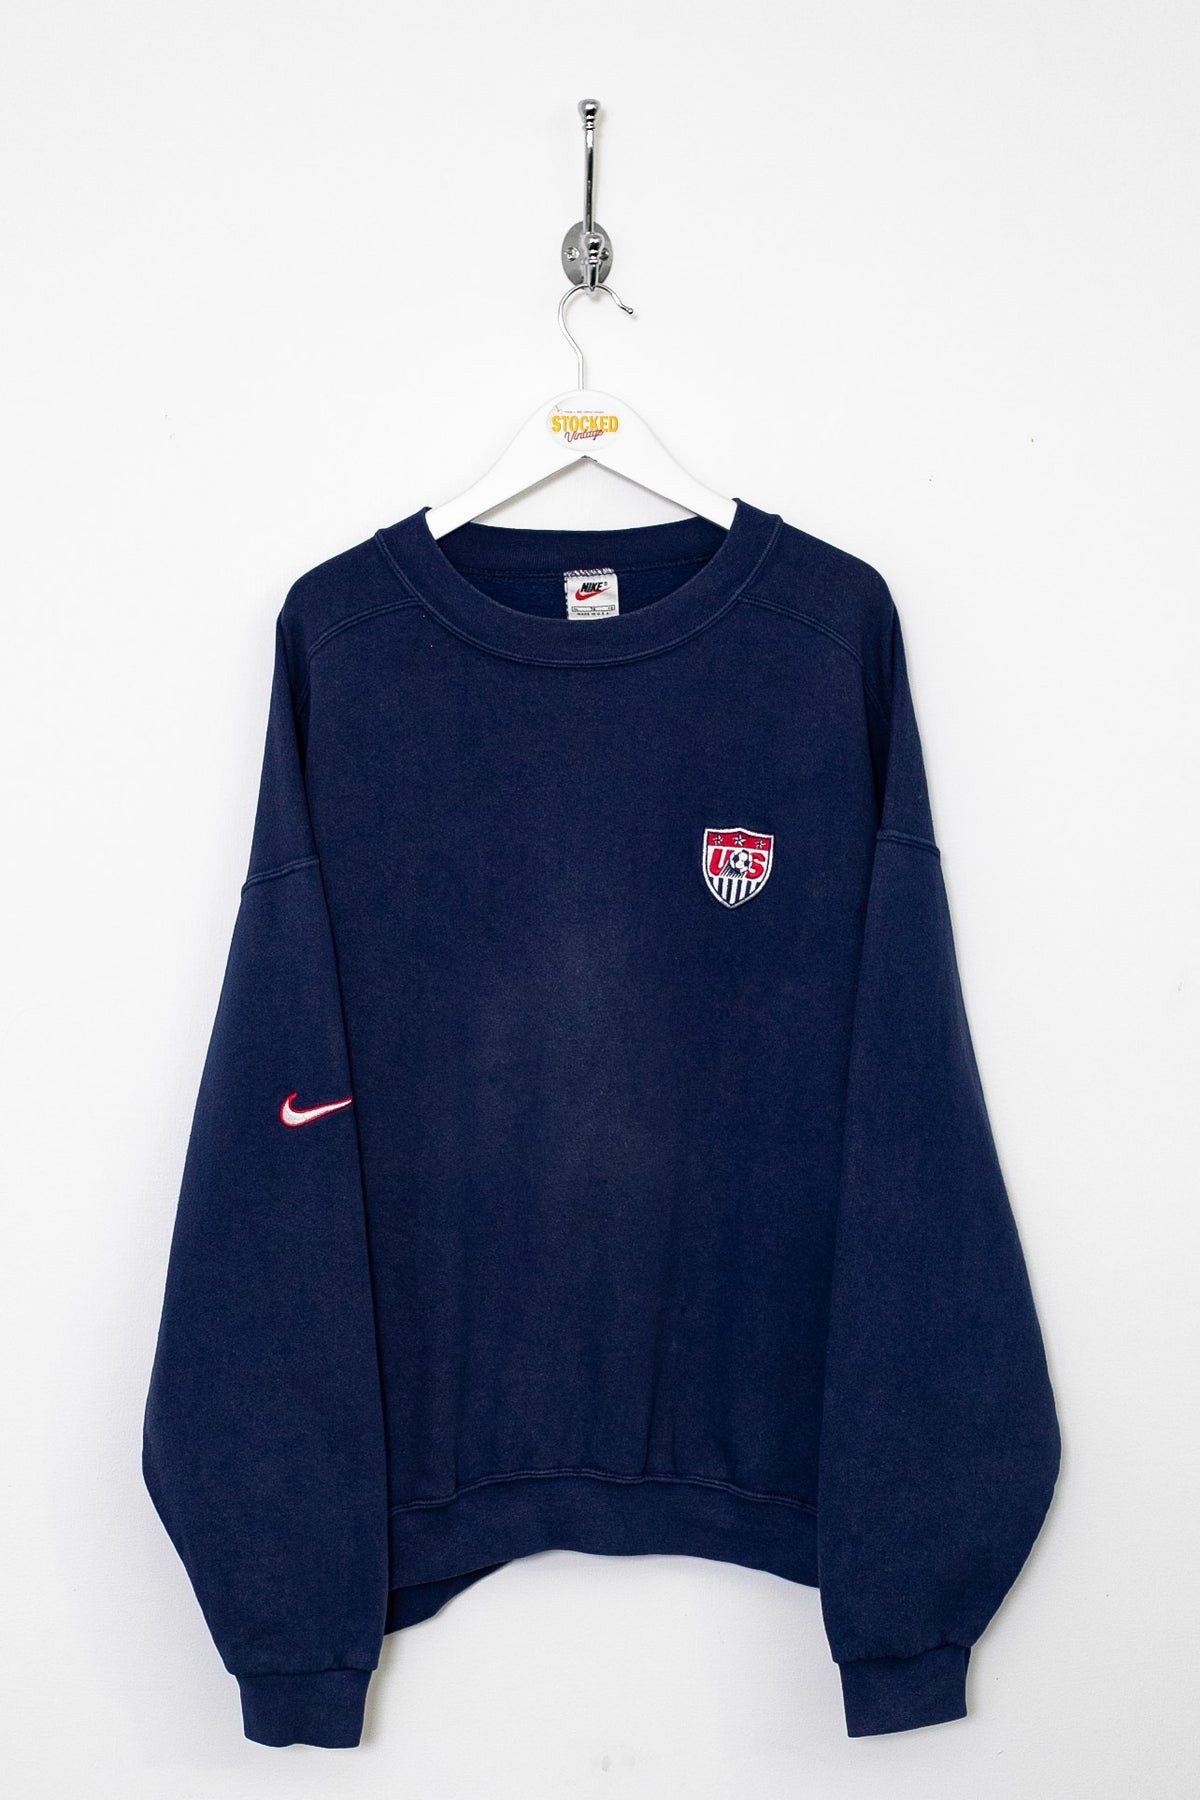 90s Nike USA Football Sweatshirt (L)